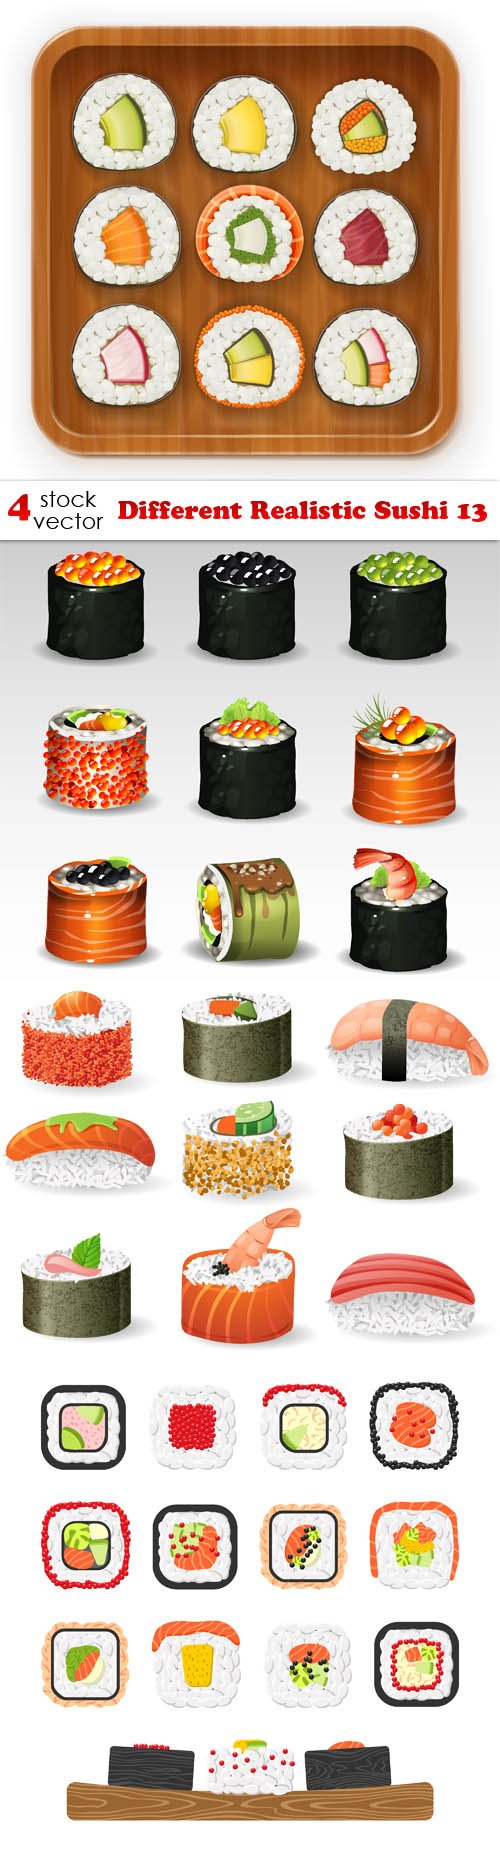 Vectors - Different Realistic Sushi 13